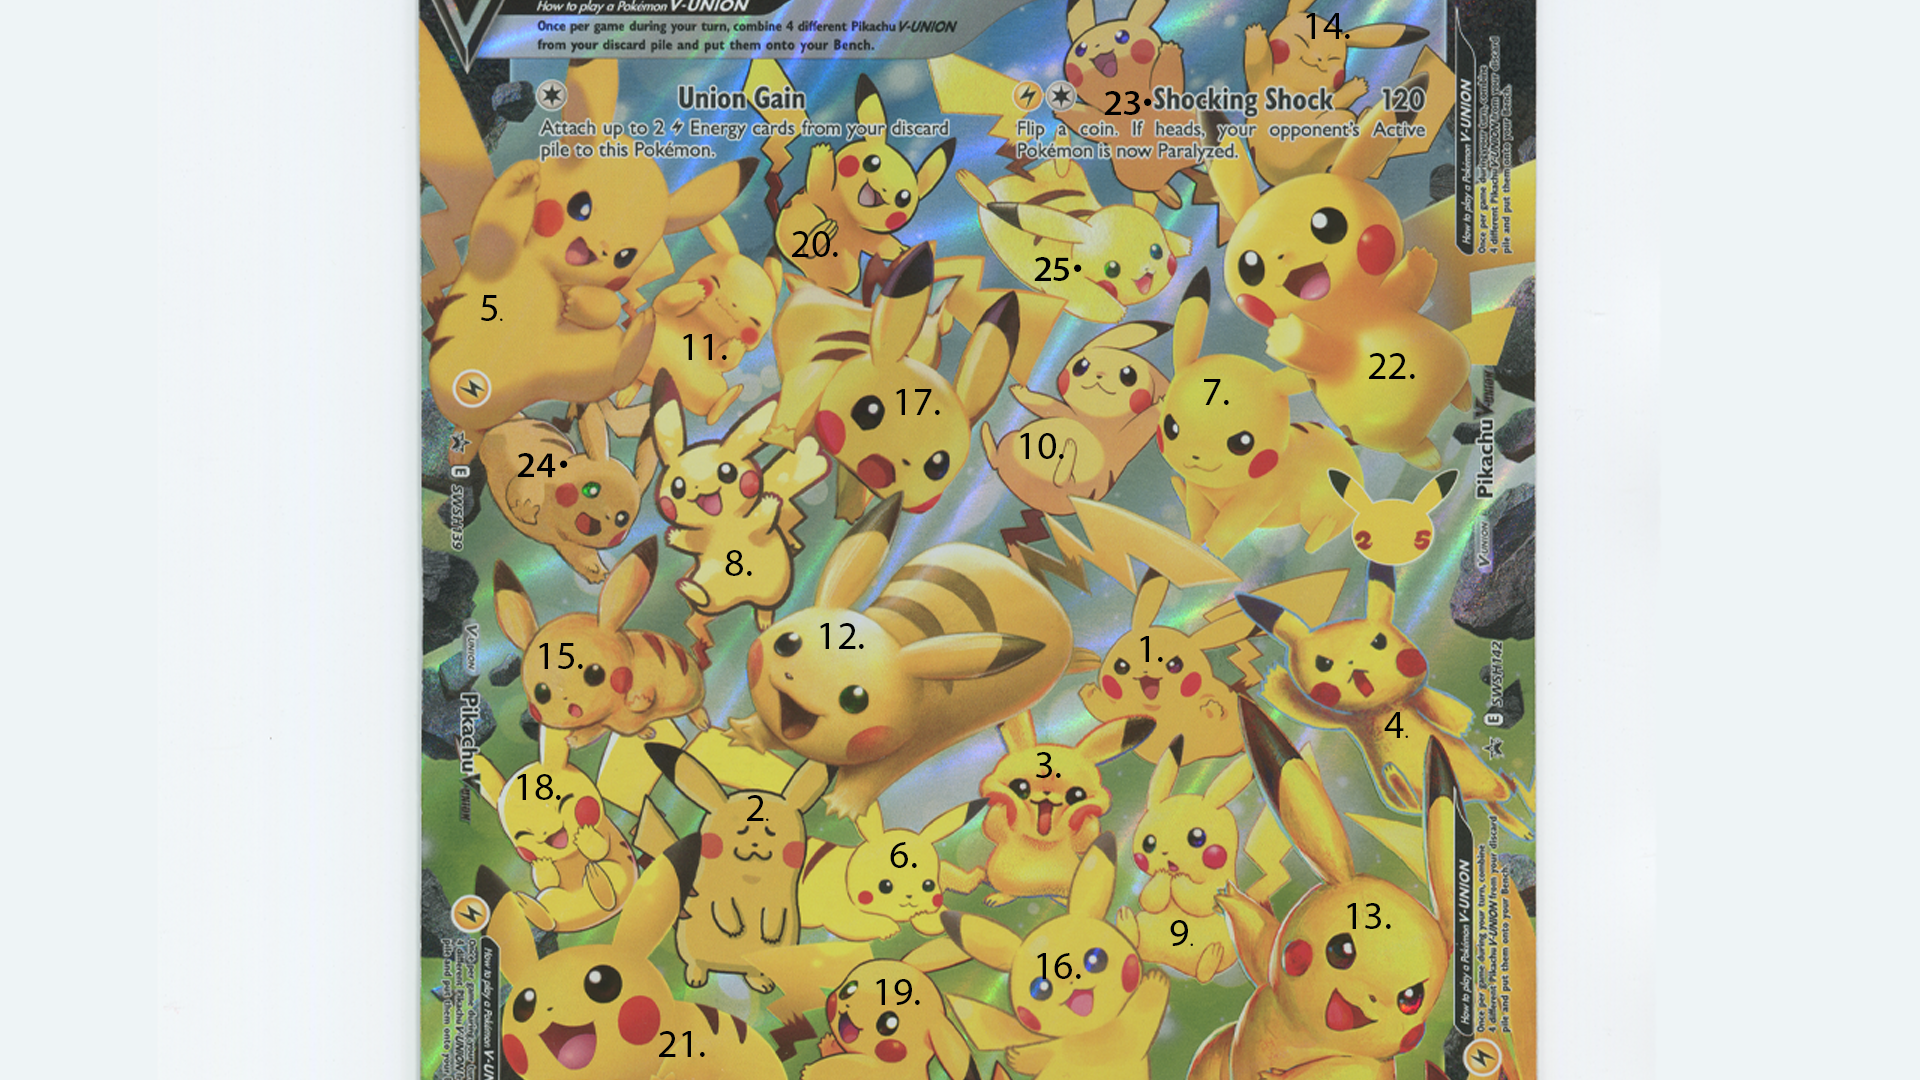 Pikachu V-Union big card labelled 2